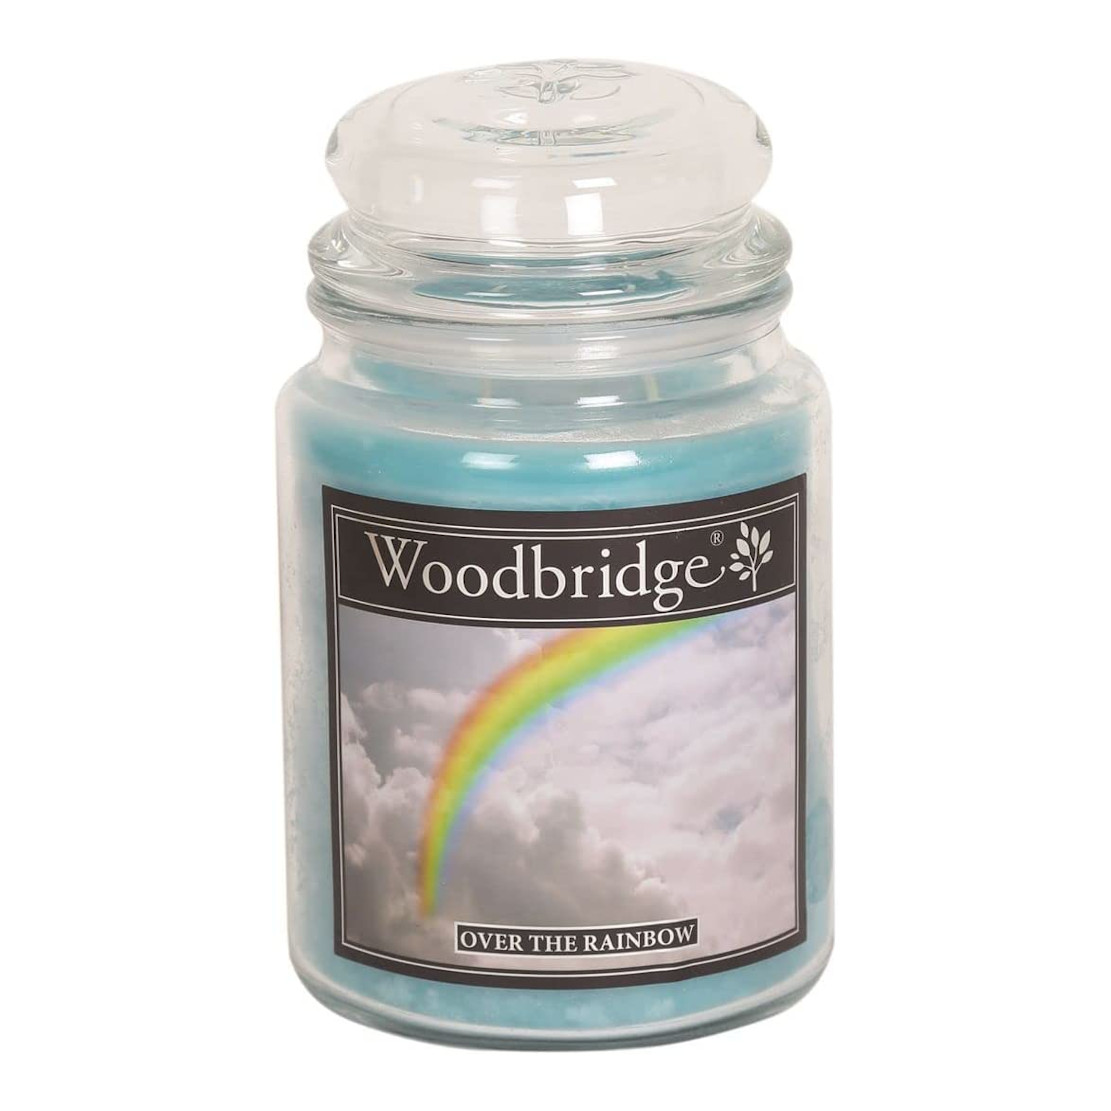 Woodbridge Over The Rainbow Candle Large Jar